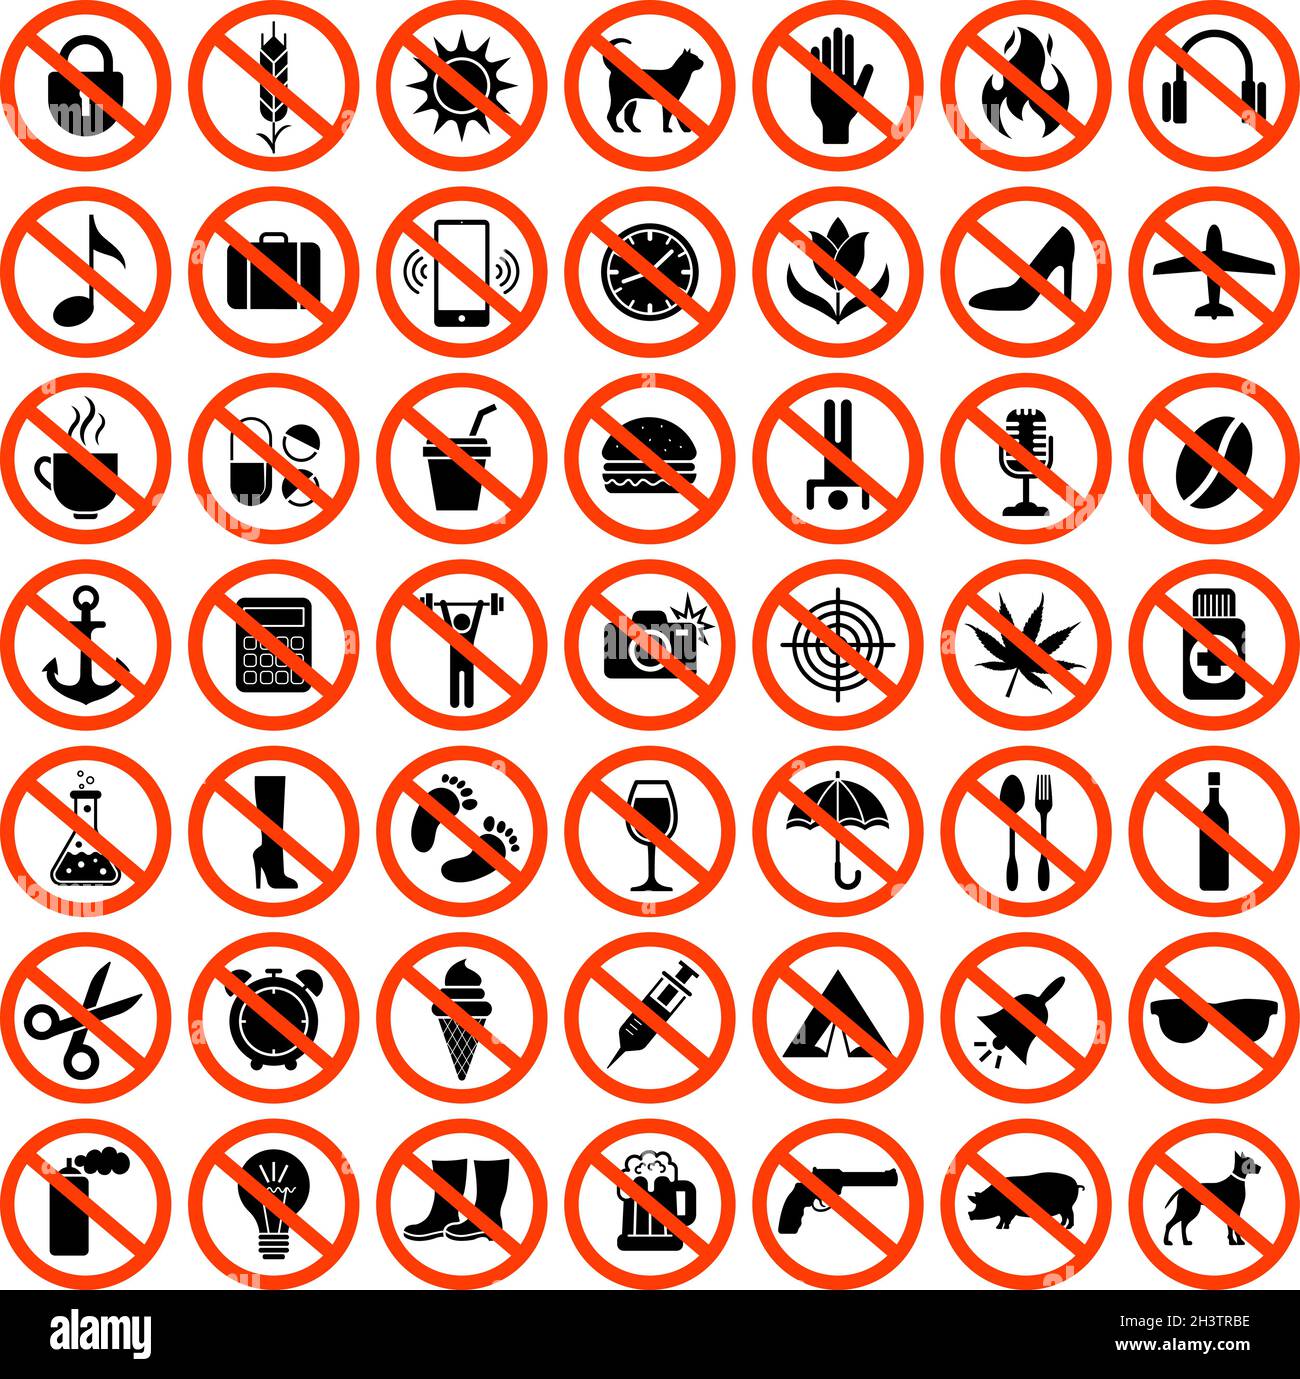 Forbidden icons. Prohibiting red symbols no motorcycle animals guns sound phones parking car vector set Stock Vector